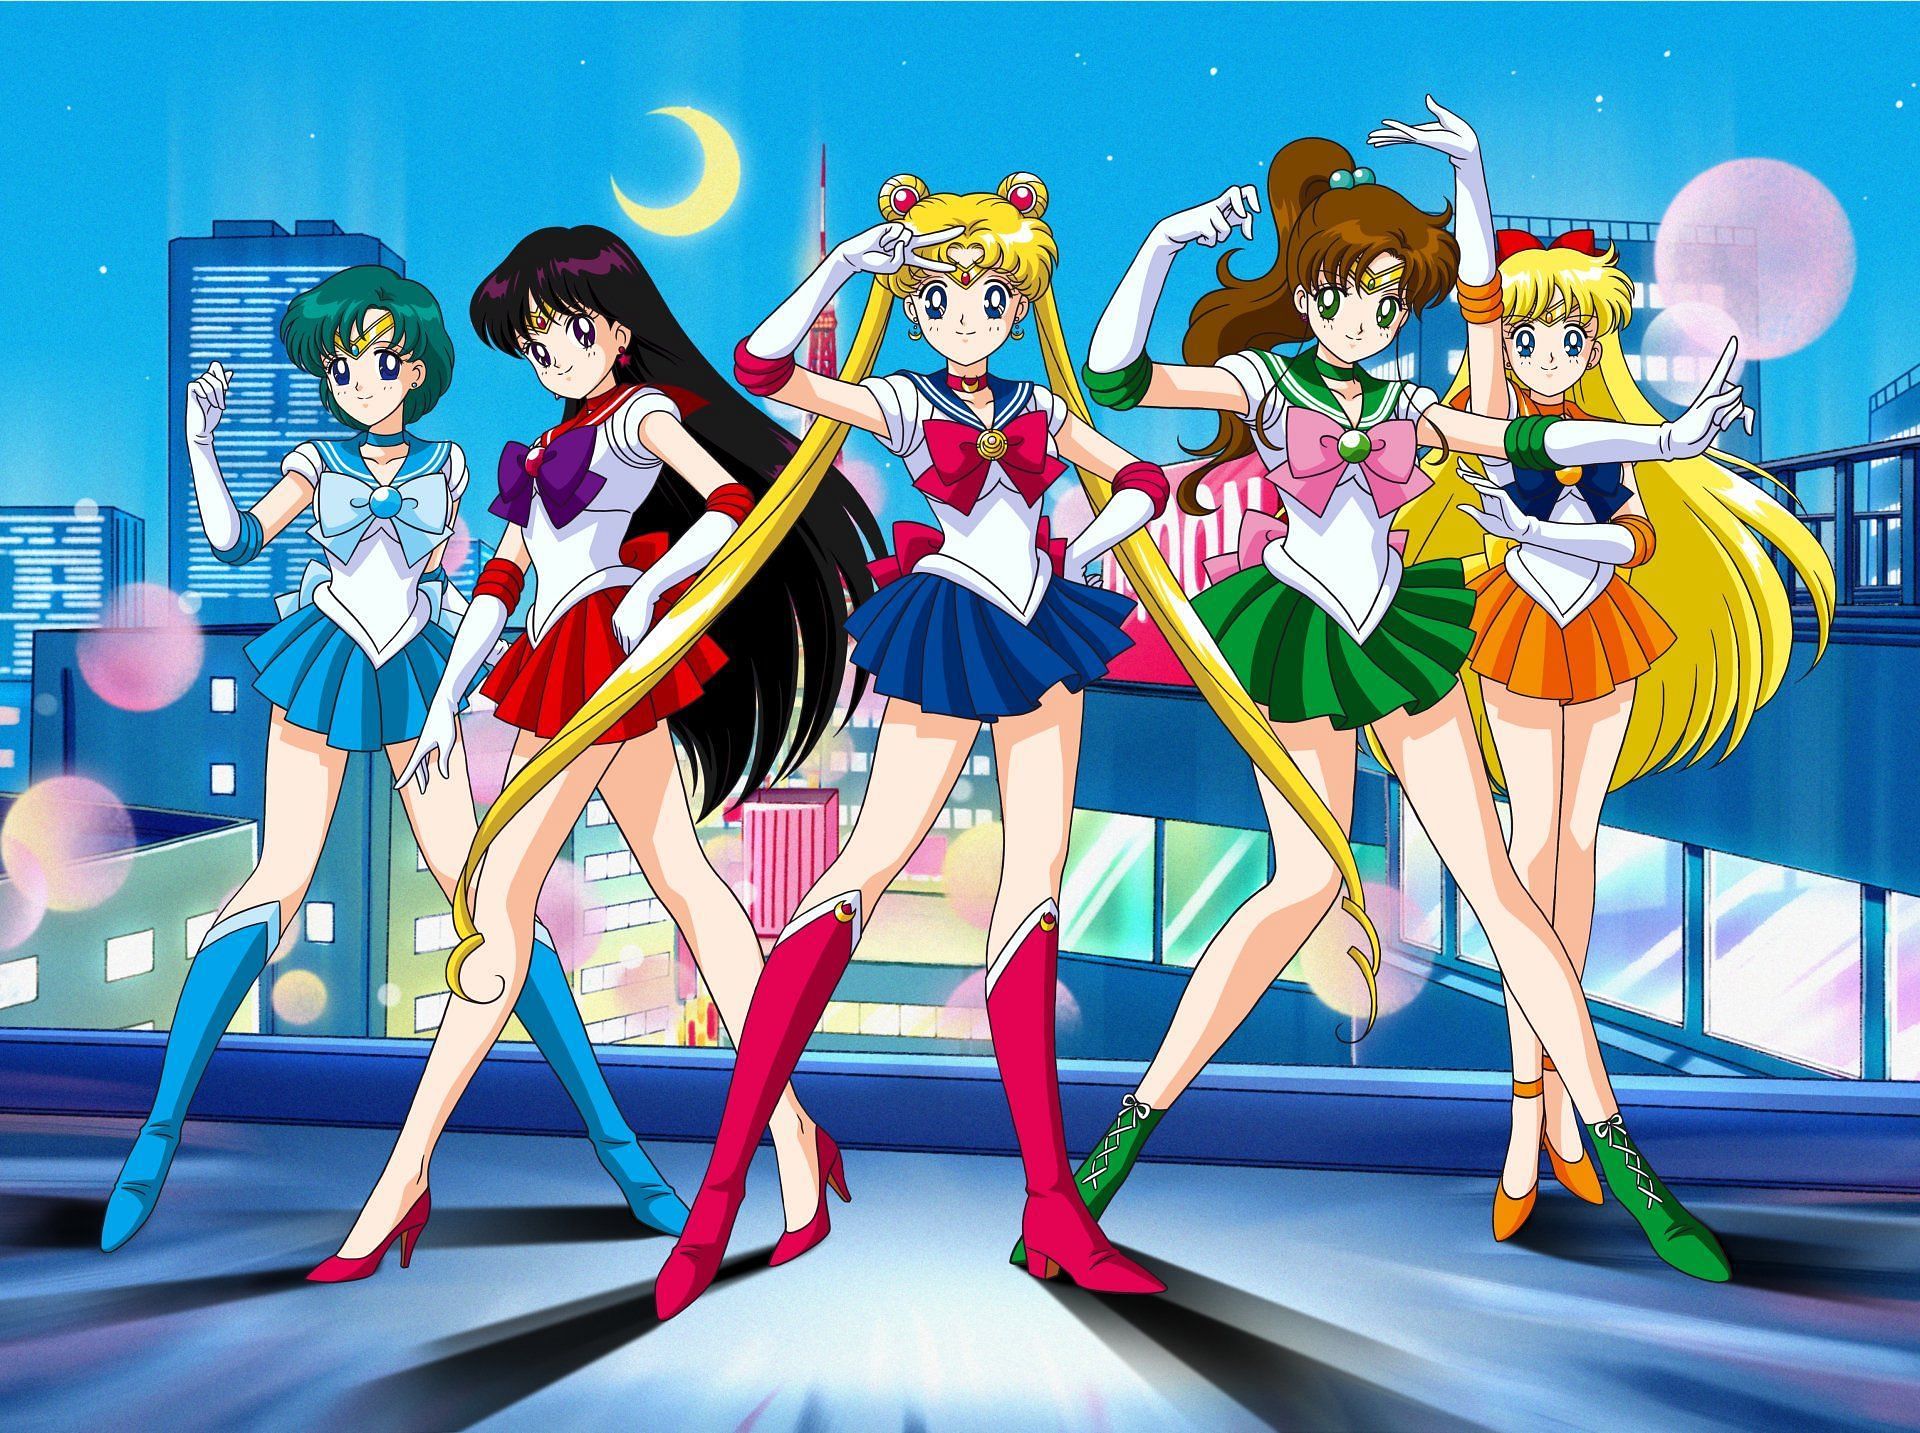 Sailor Moon (Image via Toei Animation)